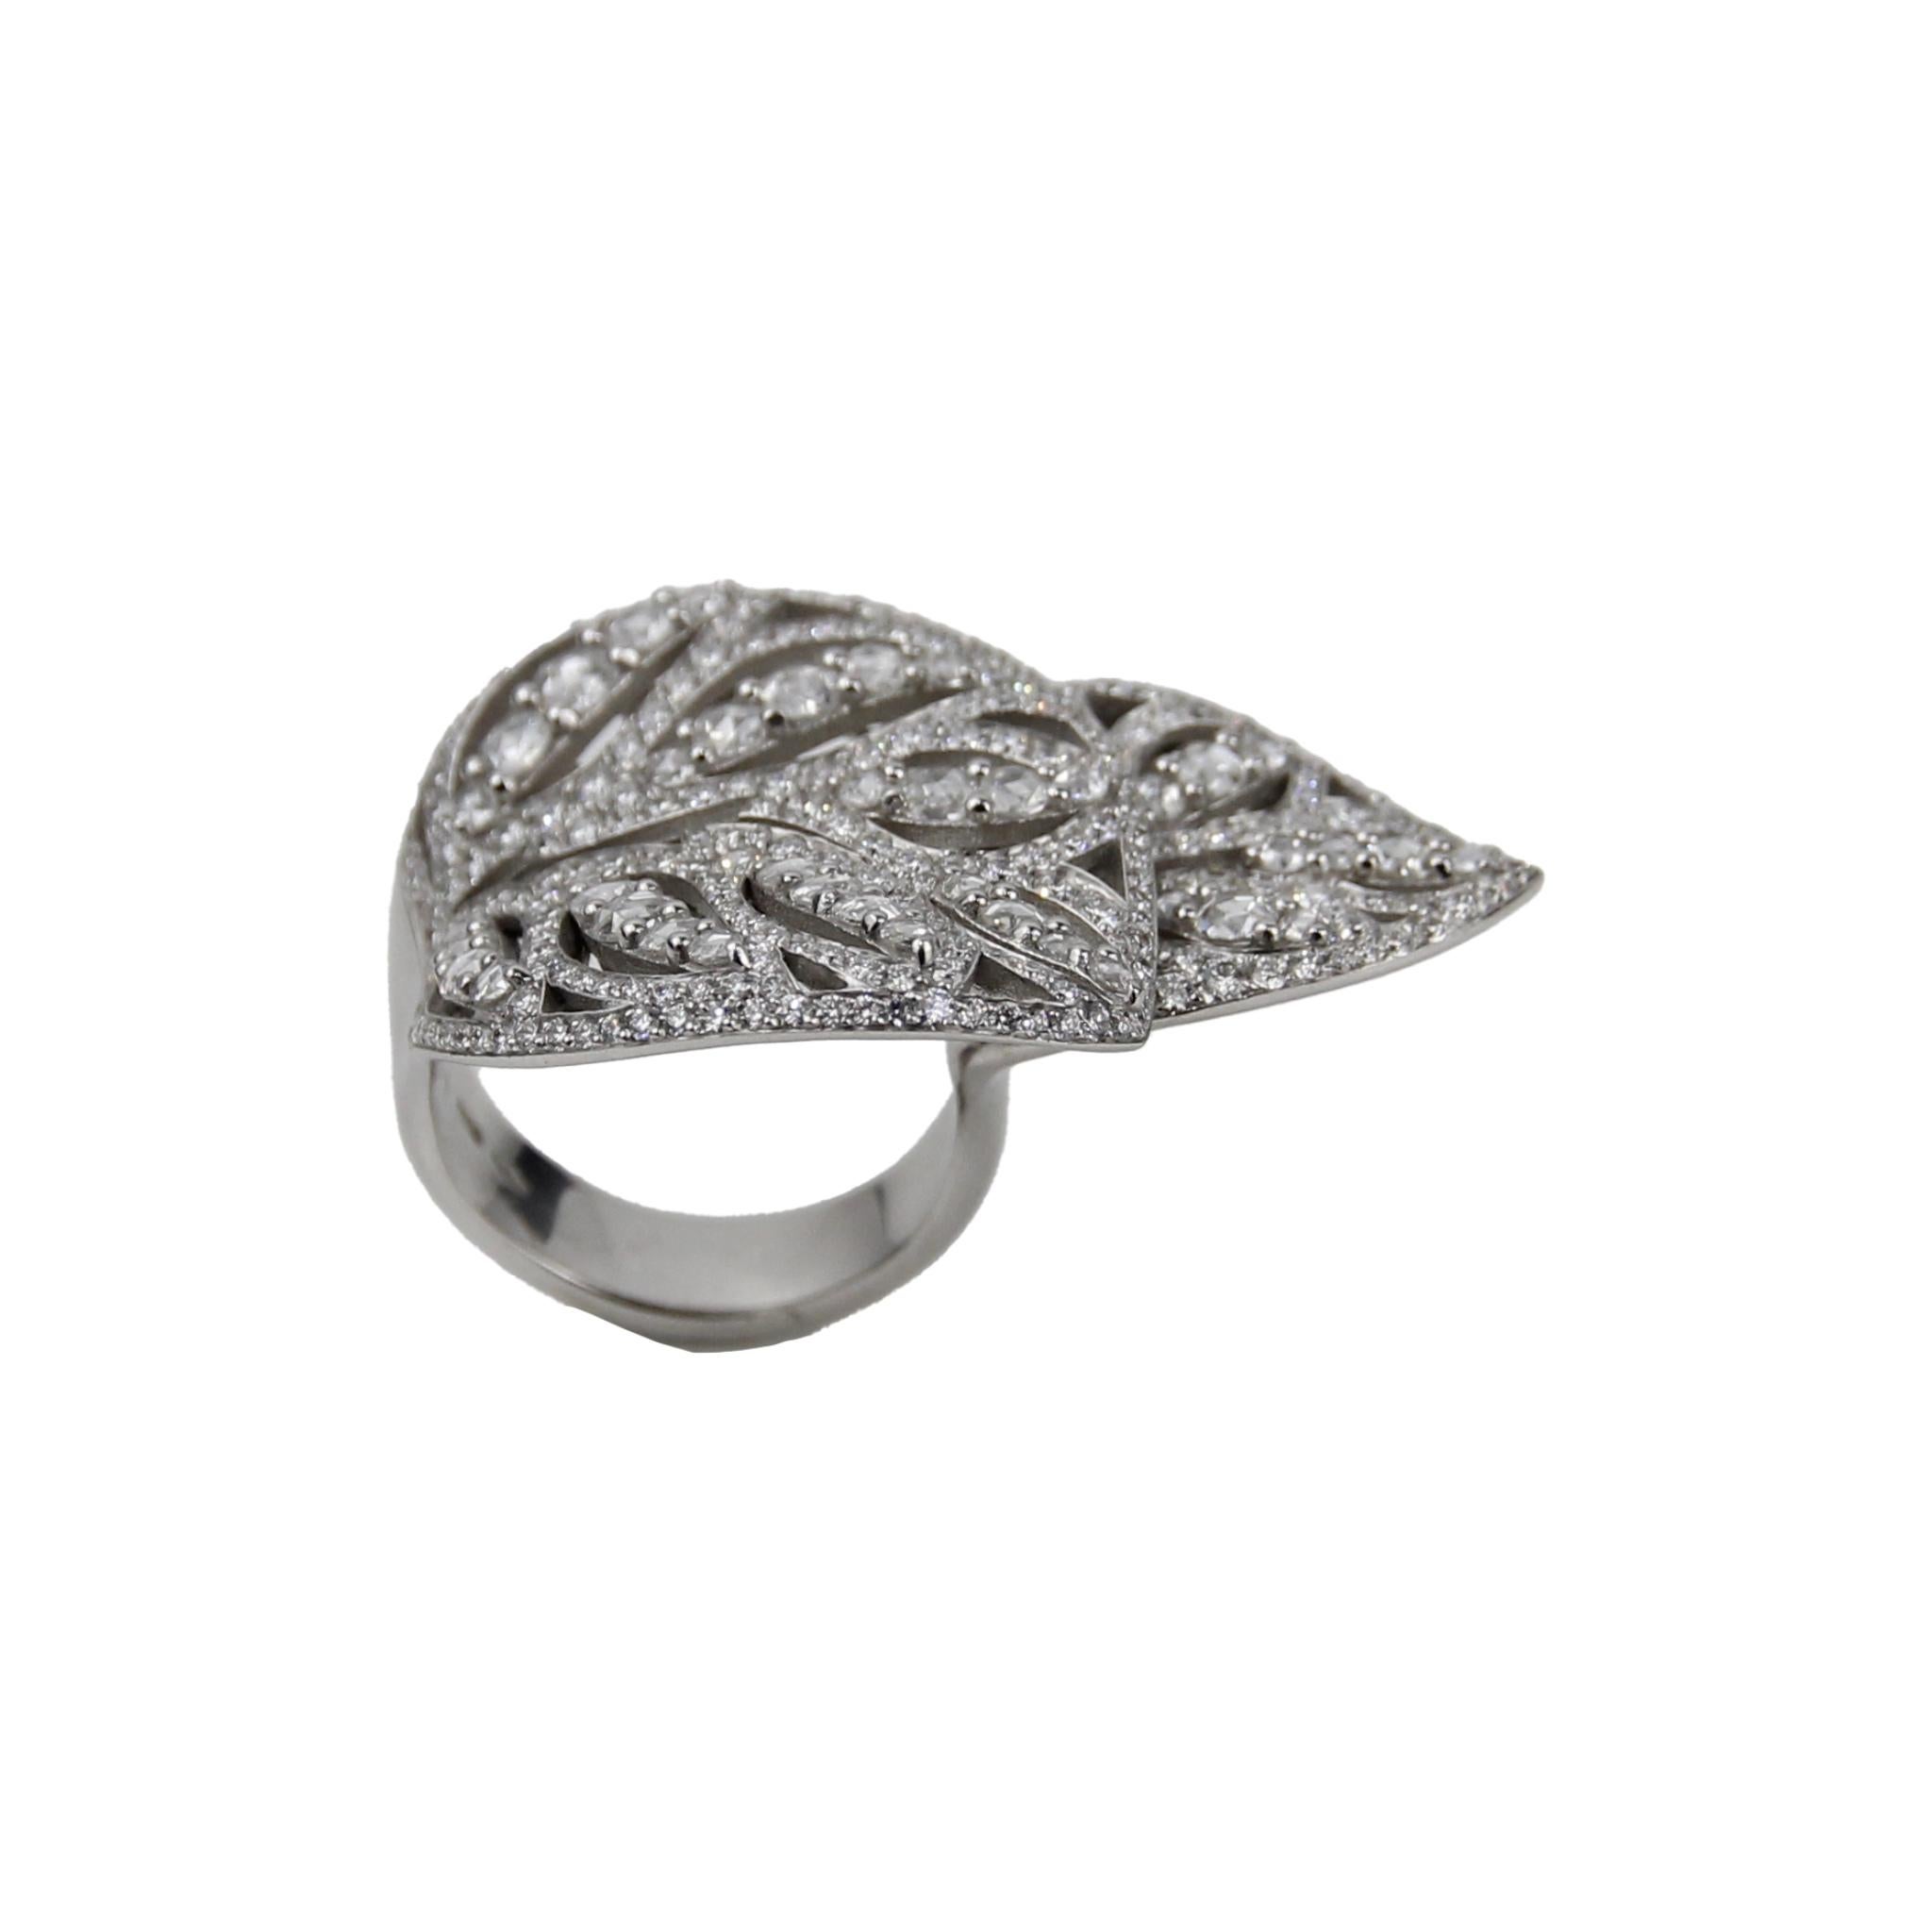 Modern Pasquale Bruni 18k White Gold 3.48ctw Diamond Leaf Ring